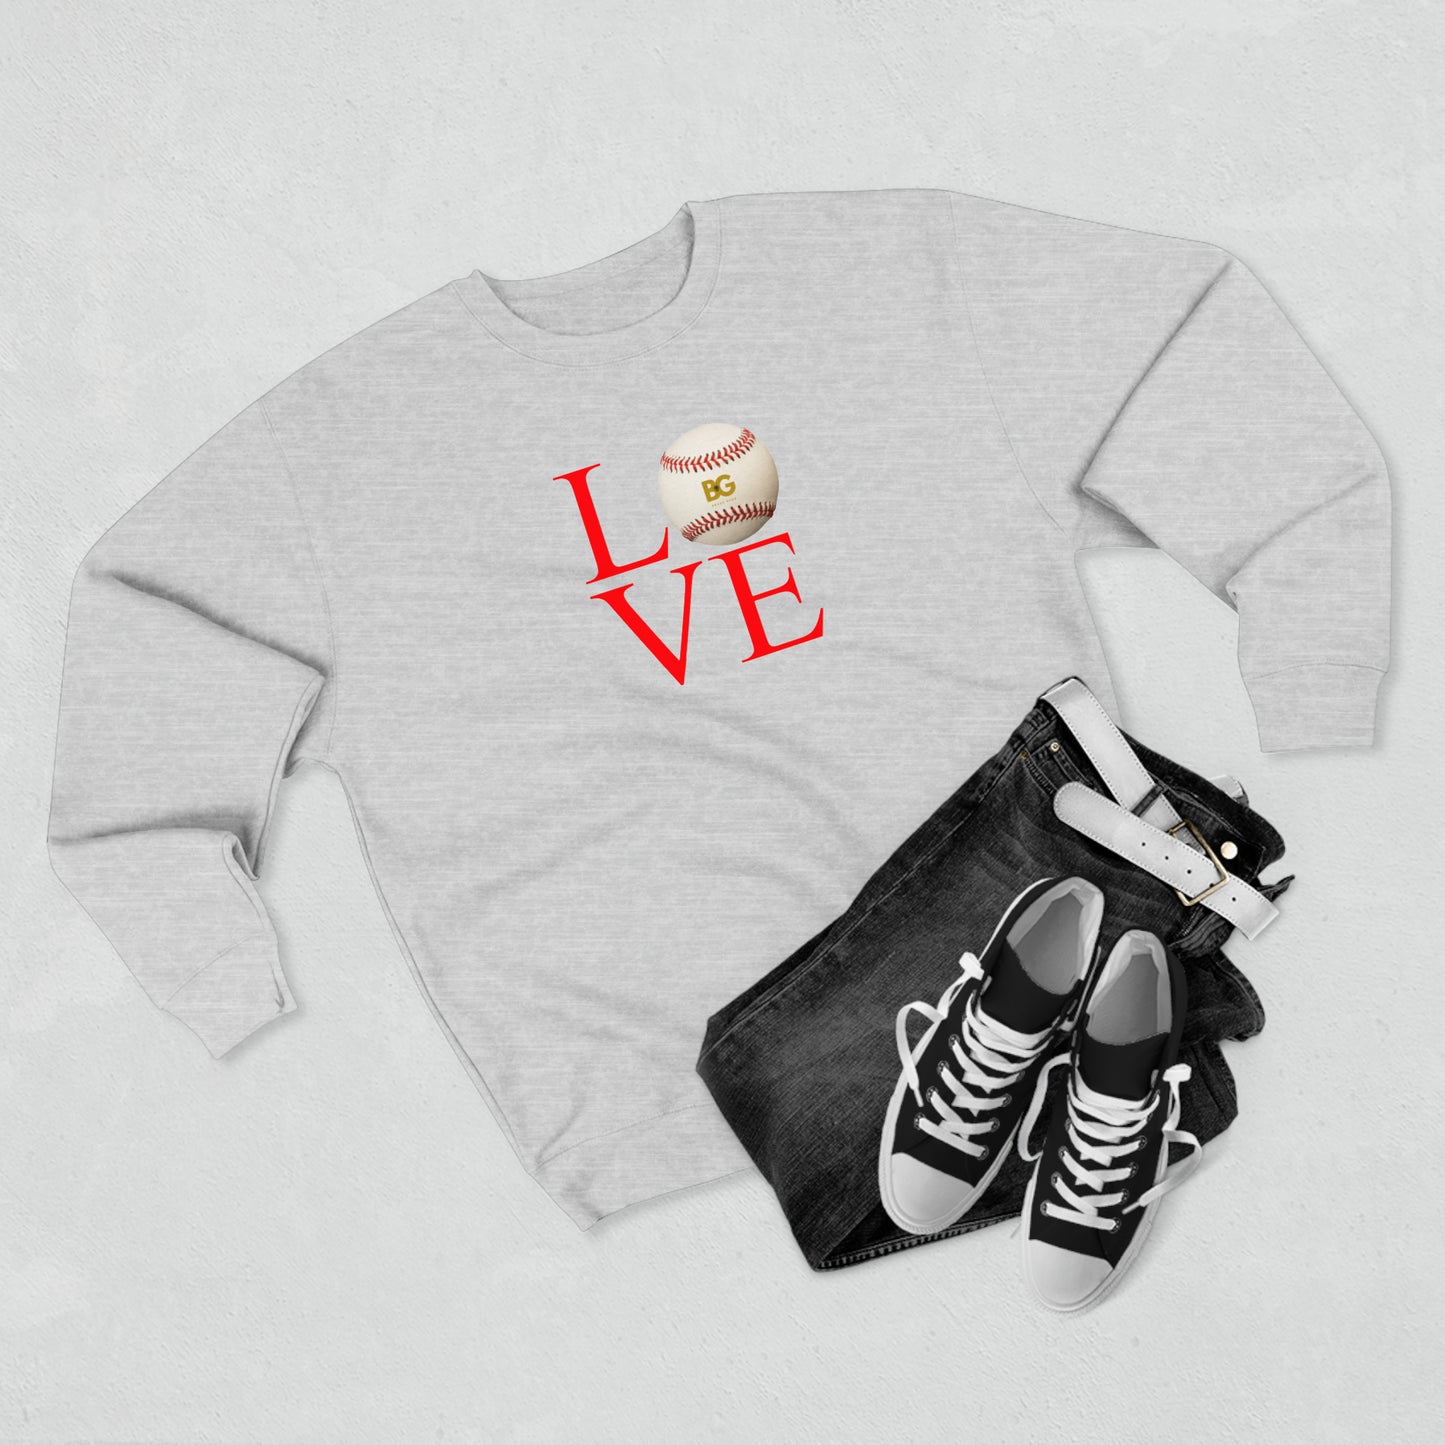 BG "LOVE baseball" Premium Crewneck Sweatshirt